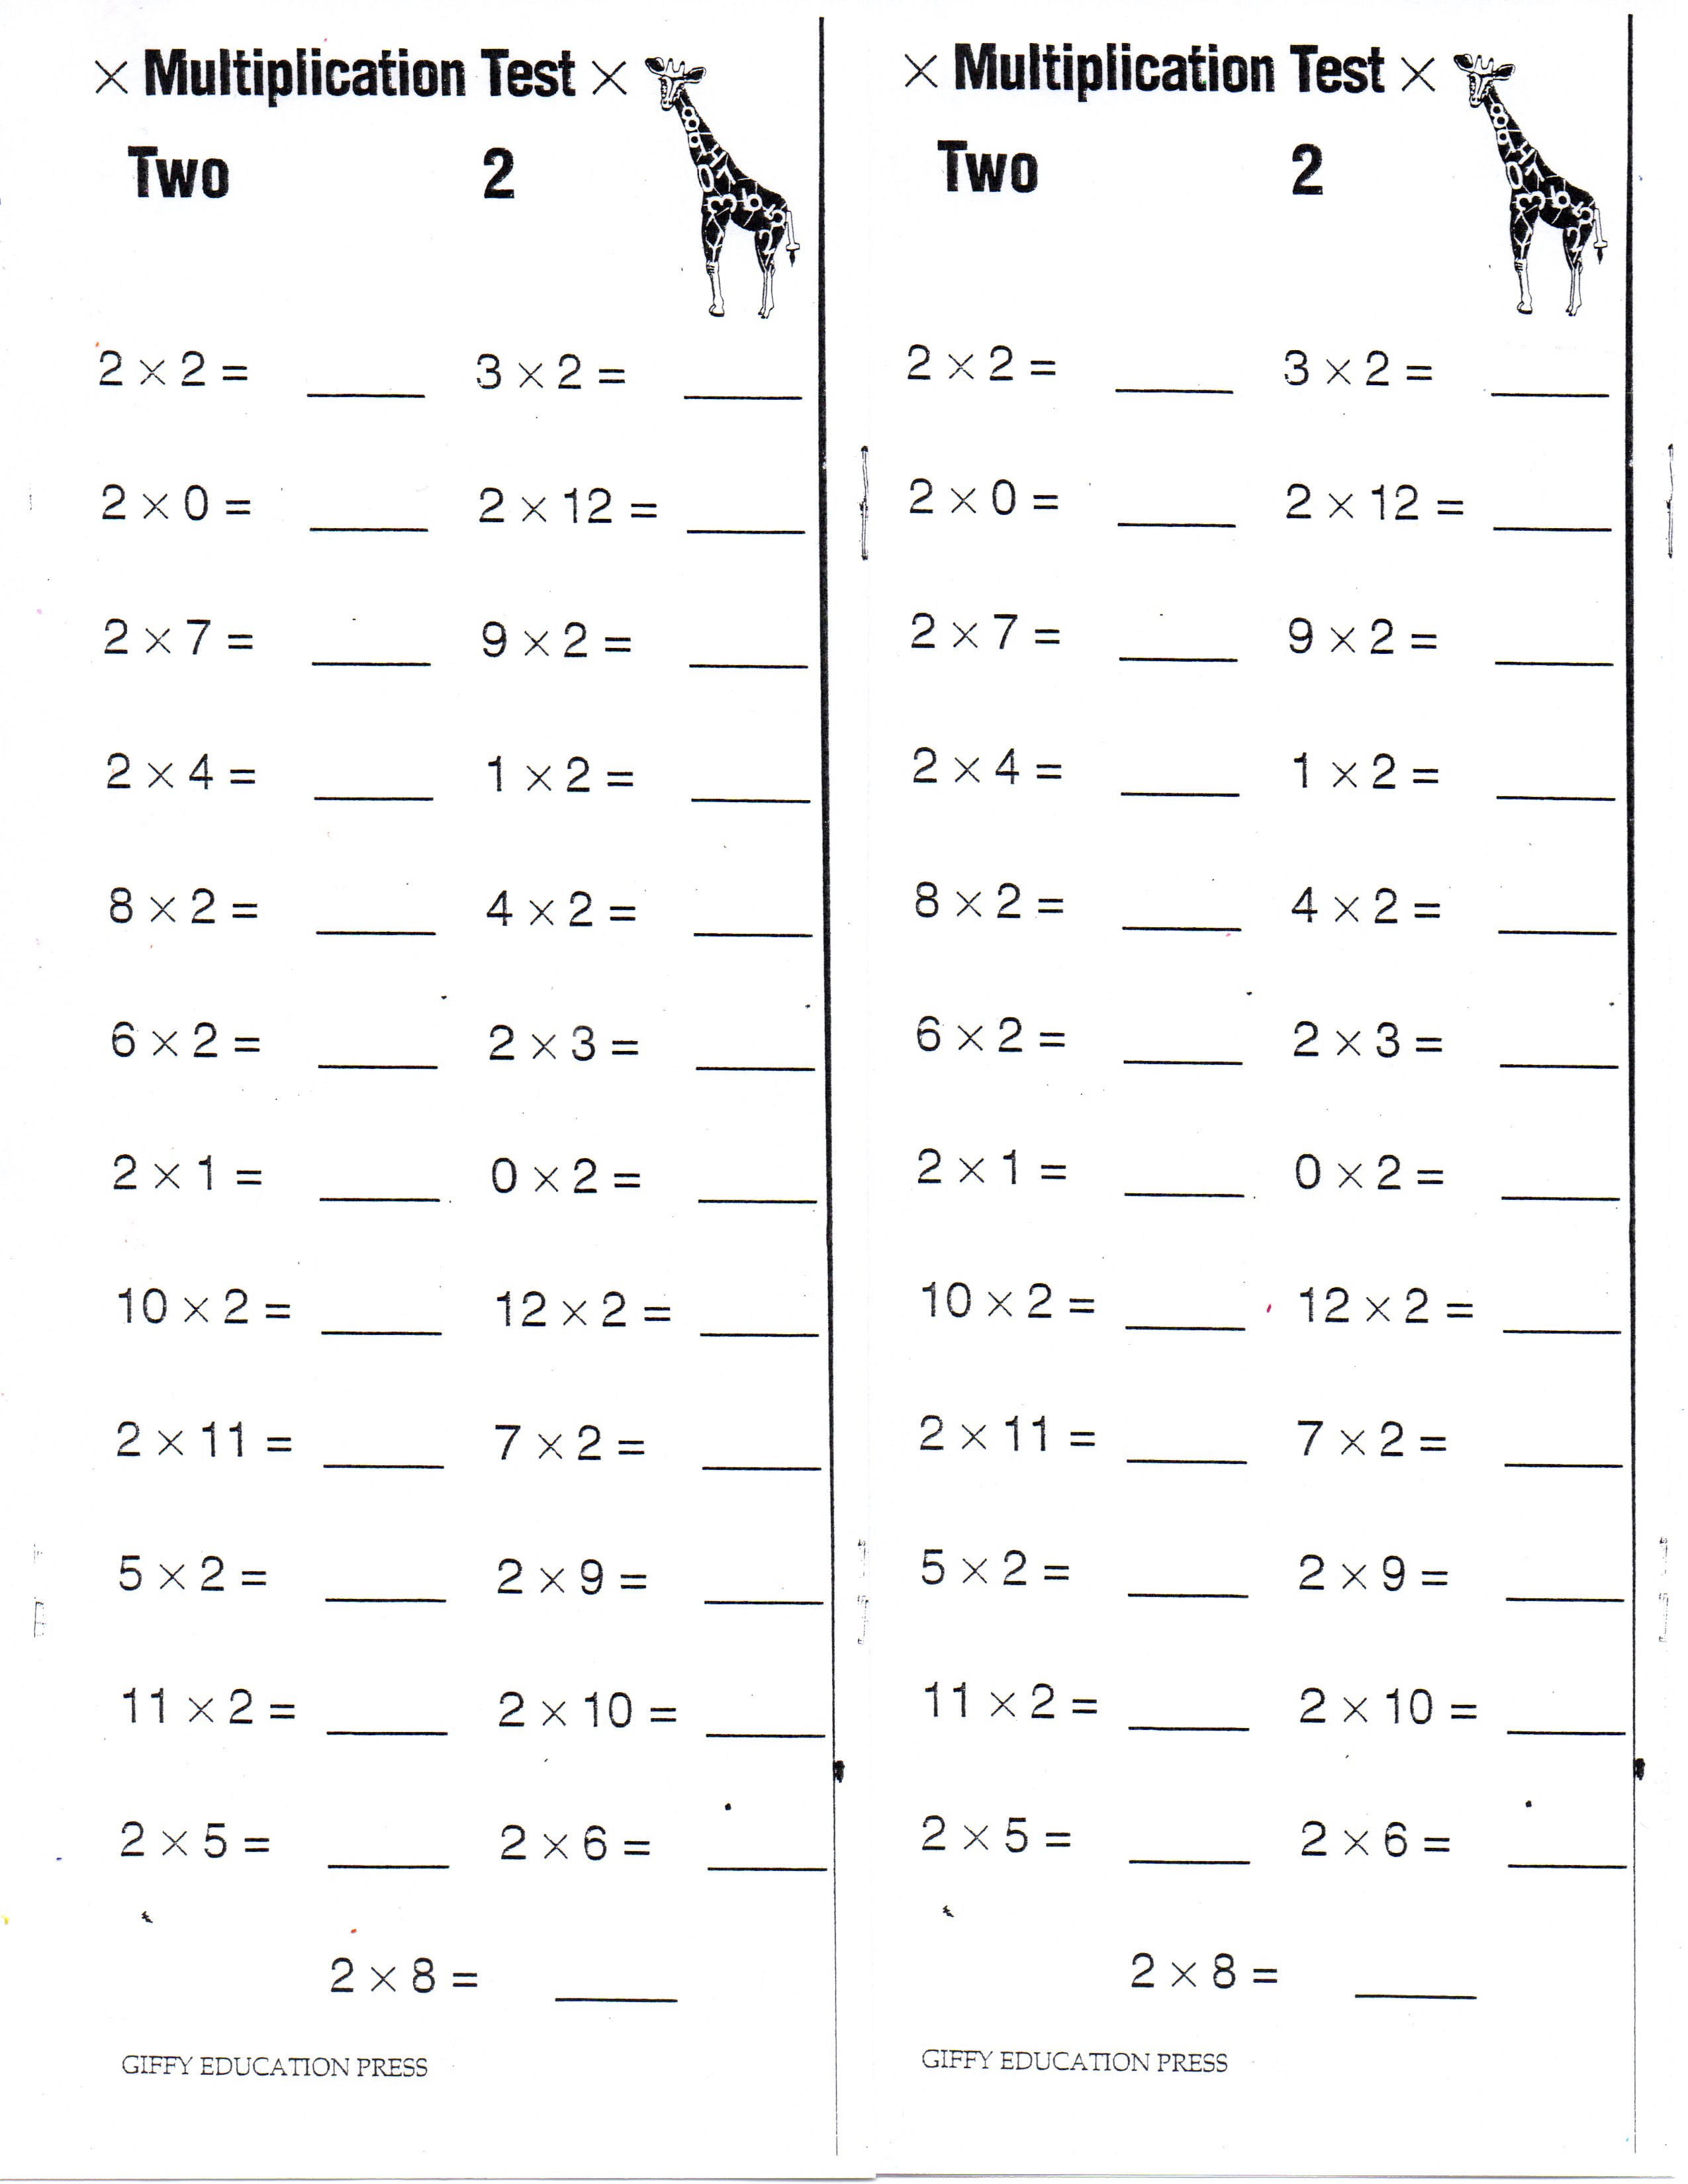 minute-math-multiplication